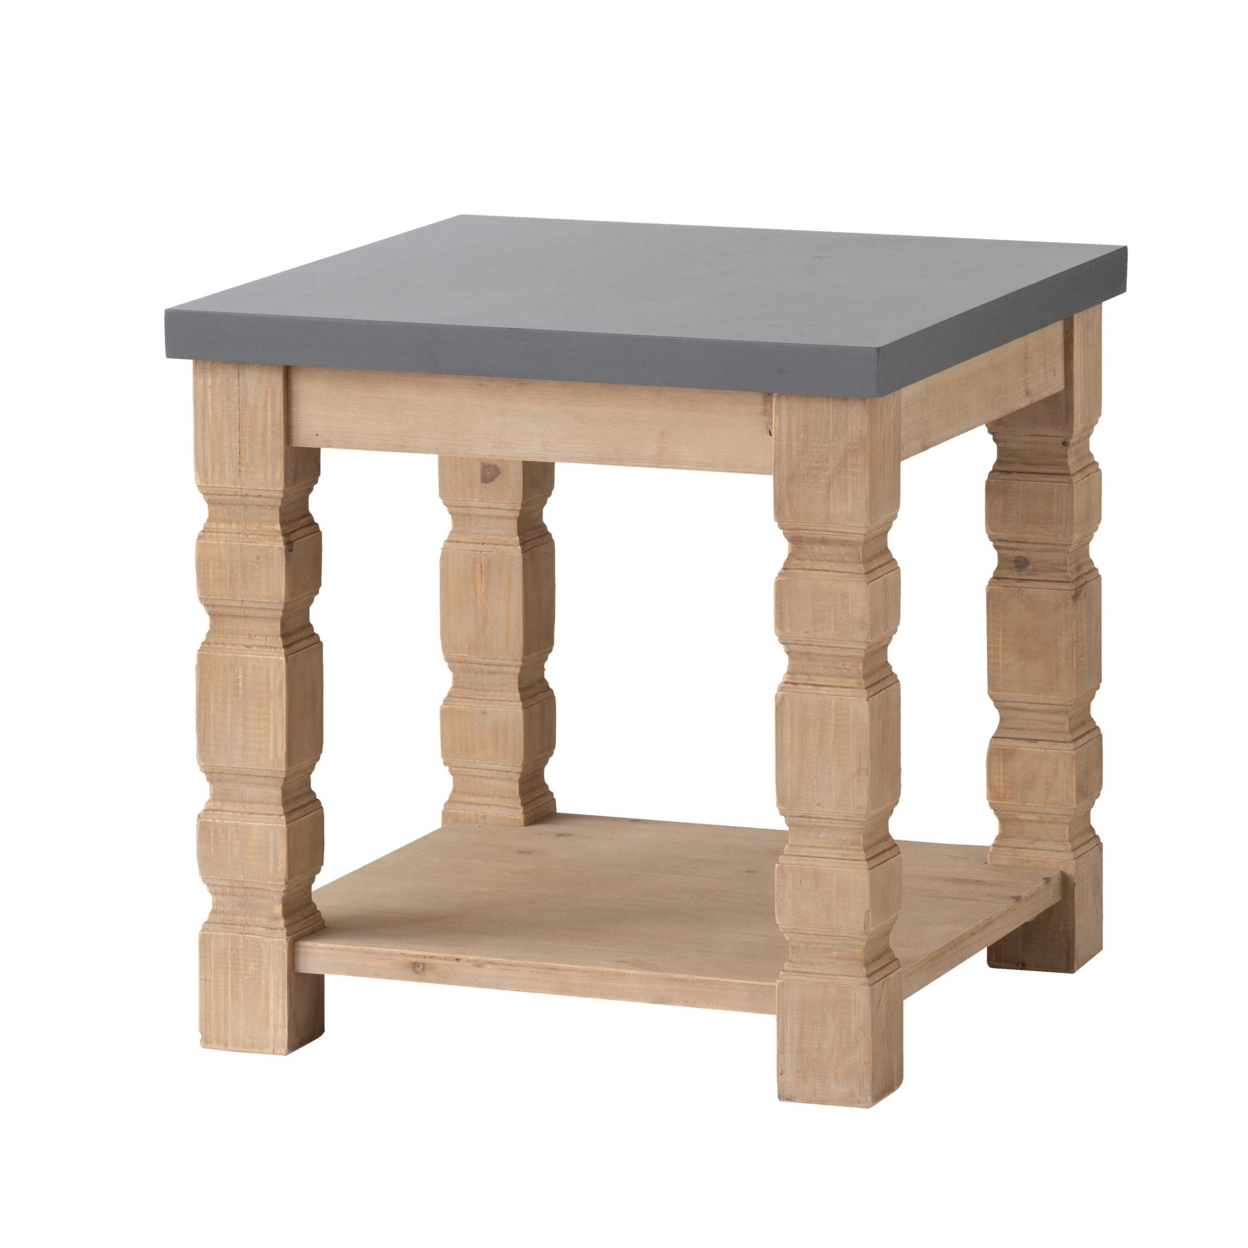 24 Inch Square Side End Table, Open Bottom Shelf, Fir Wood, Gray, Brown- Saltoro Sherpi